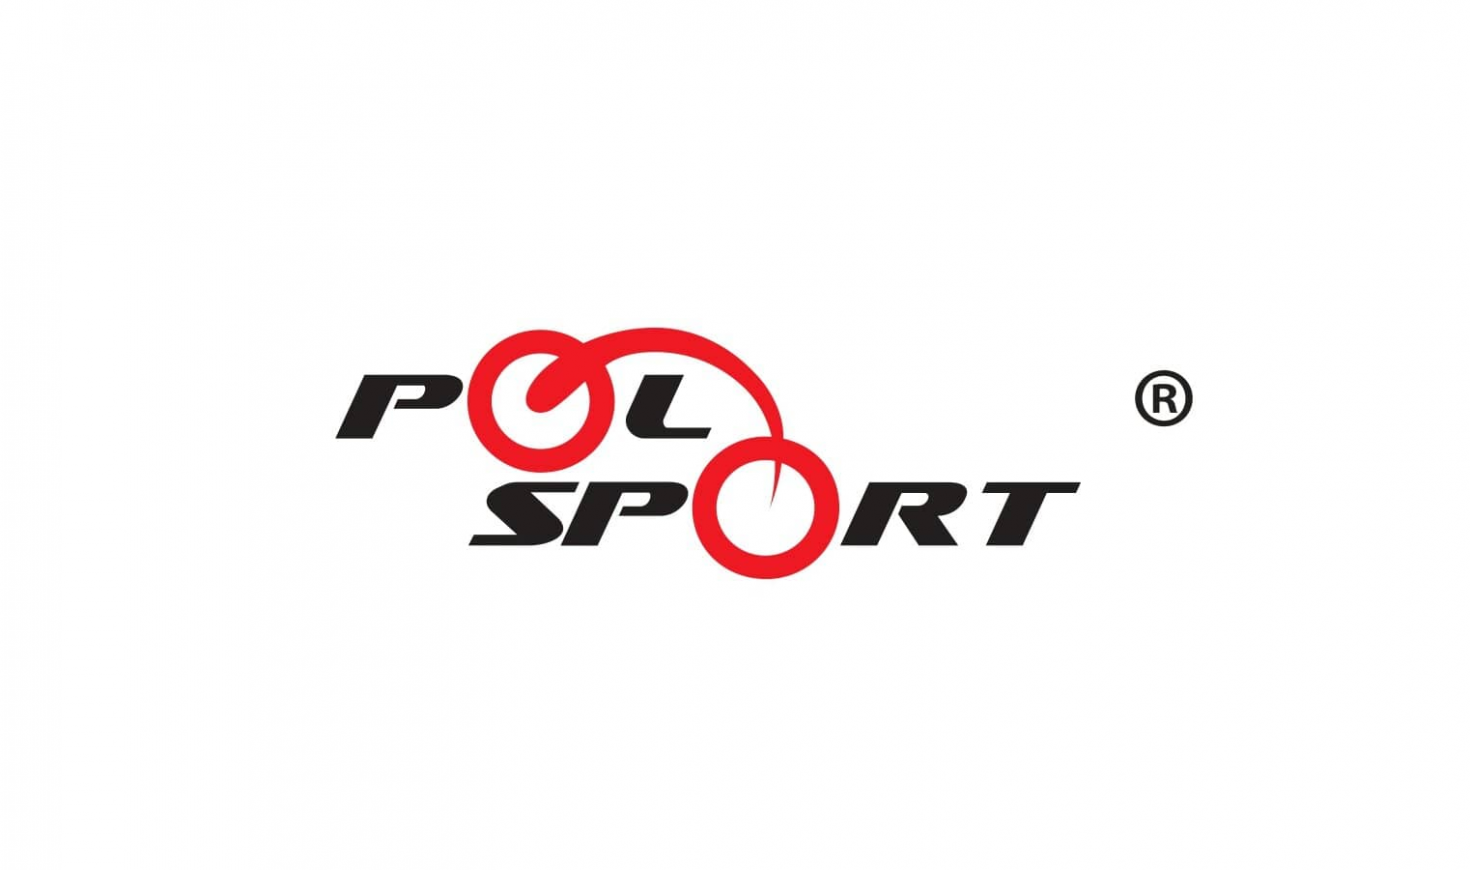 Pol-Sport logo